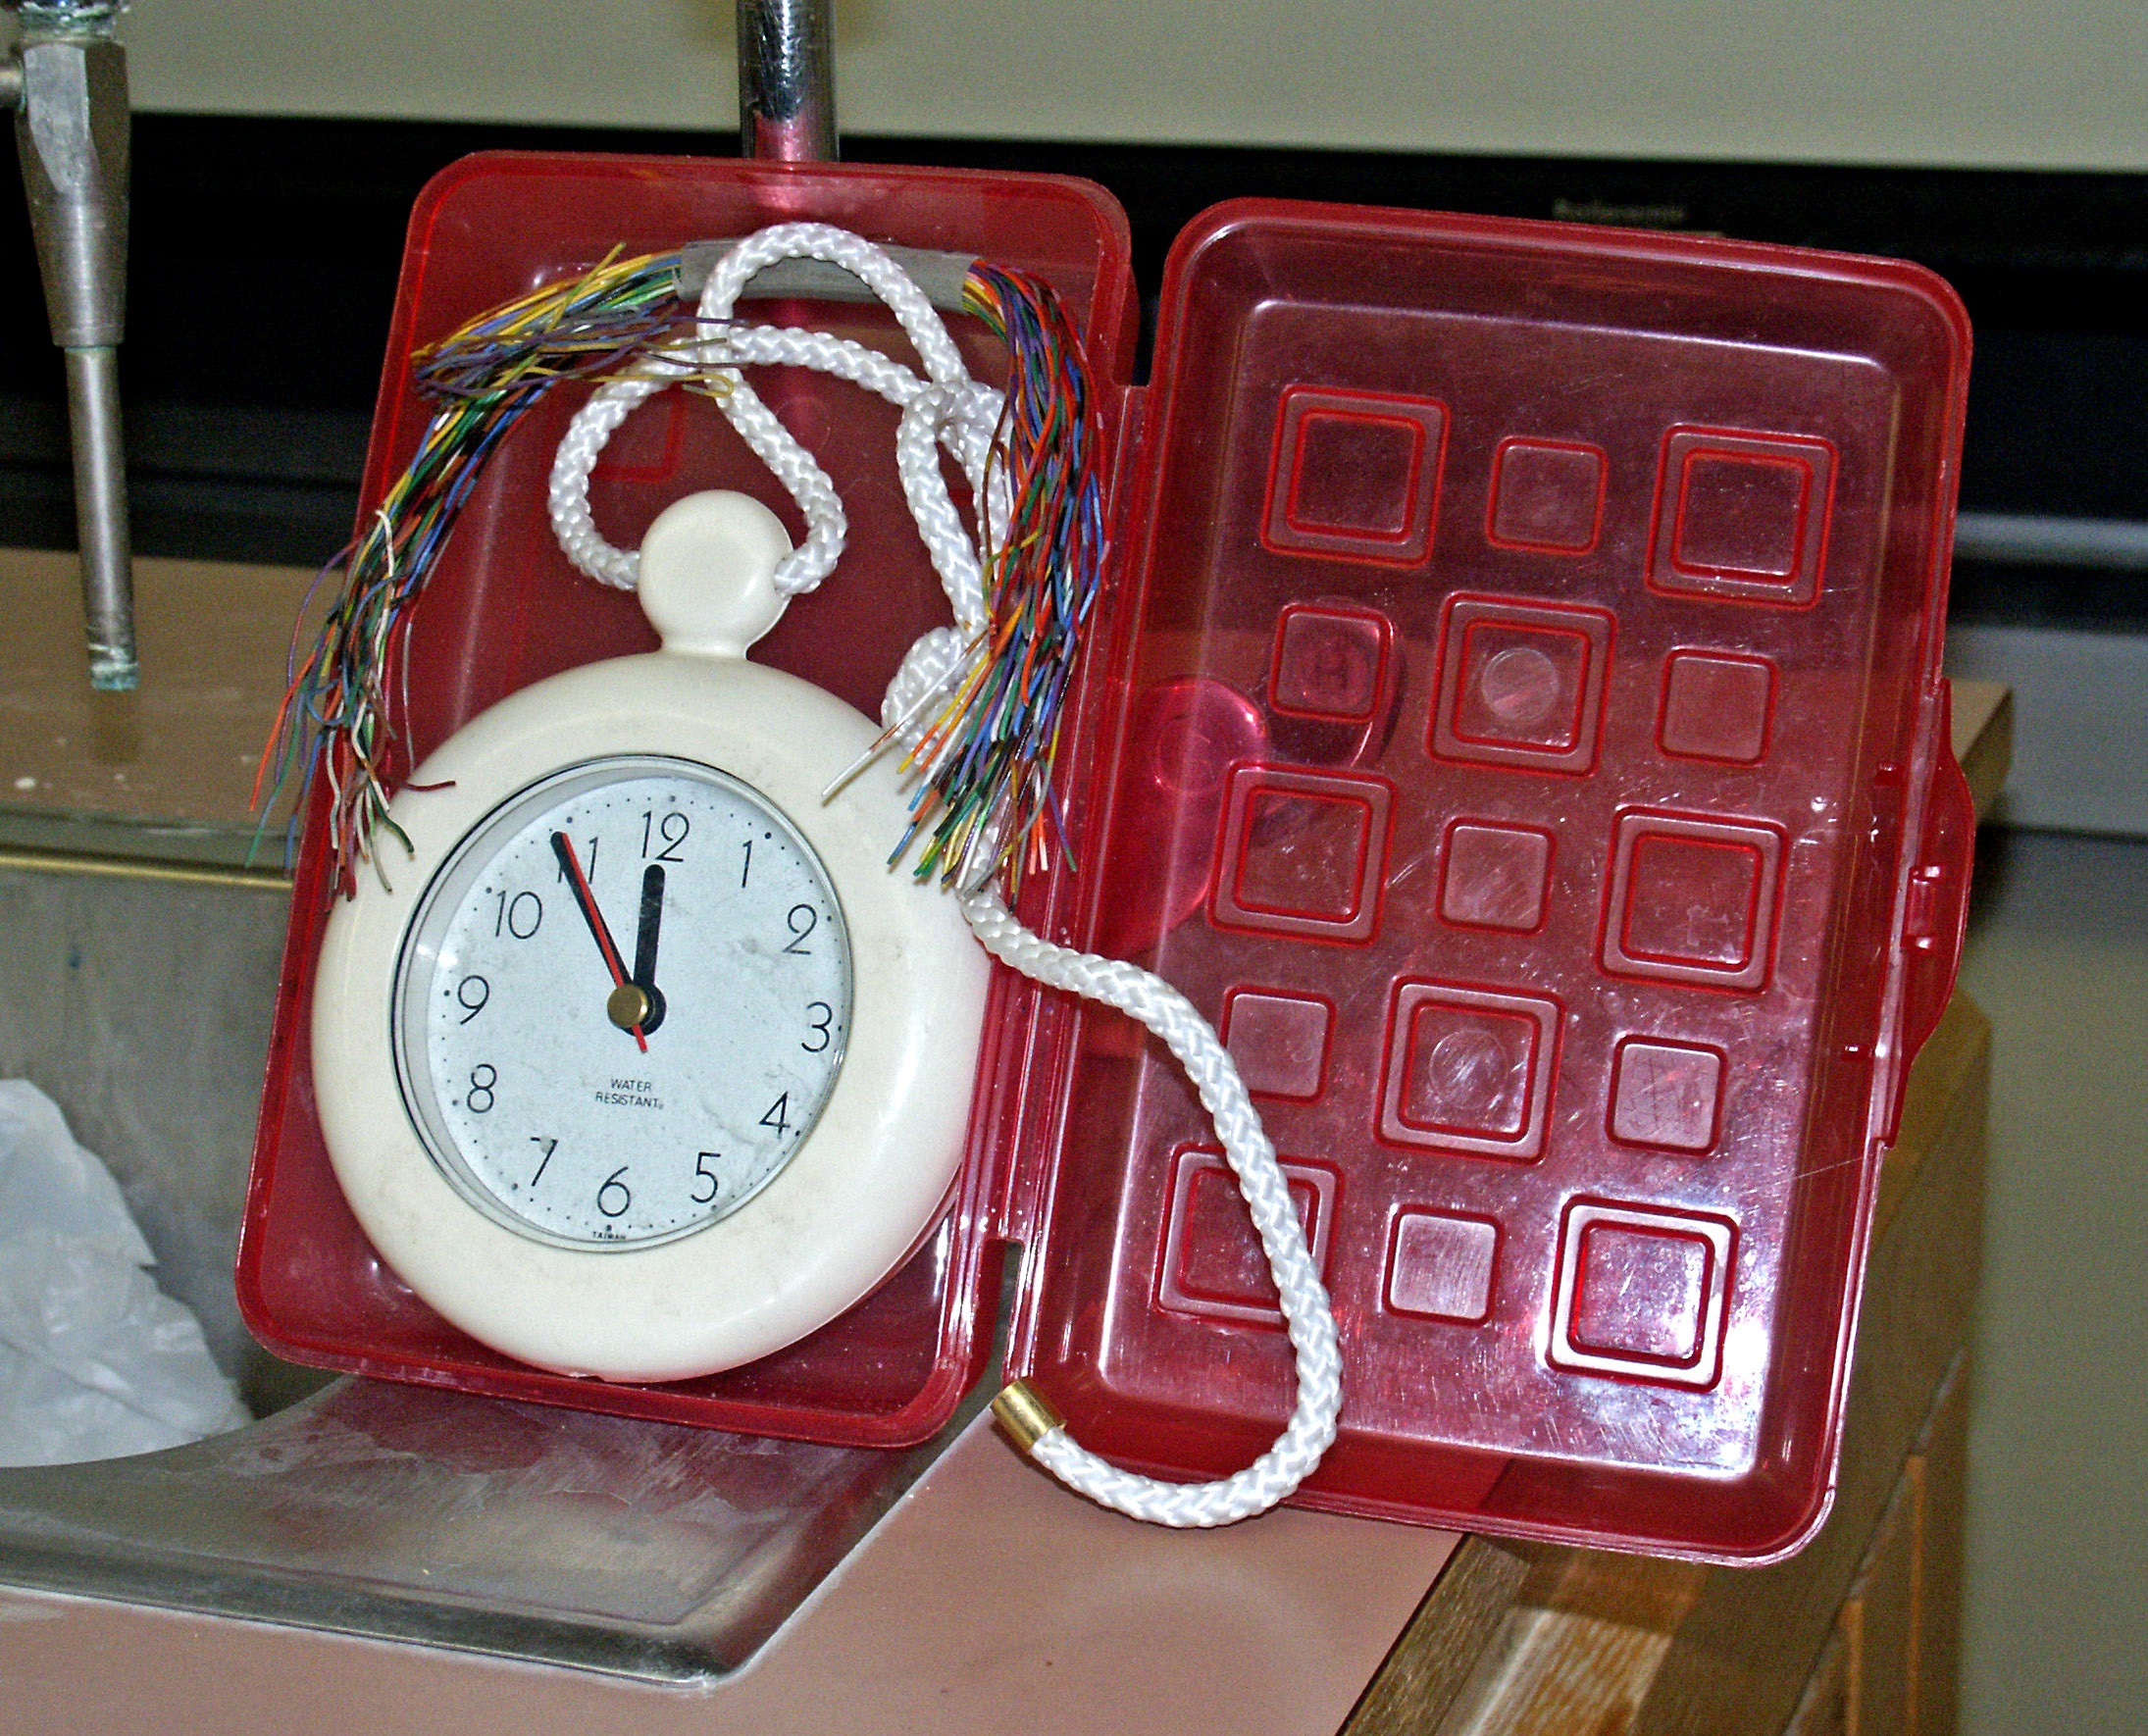 Closeup of clock